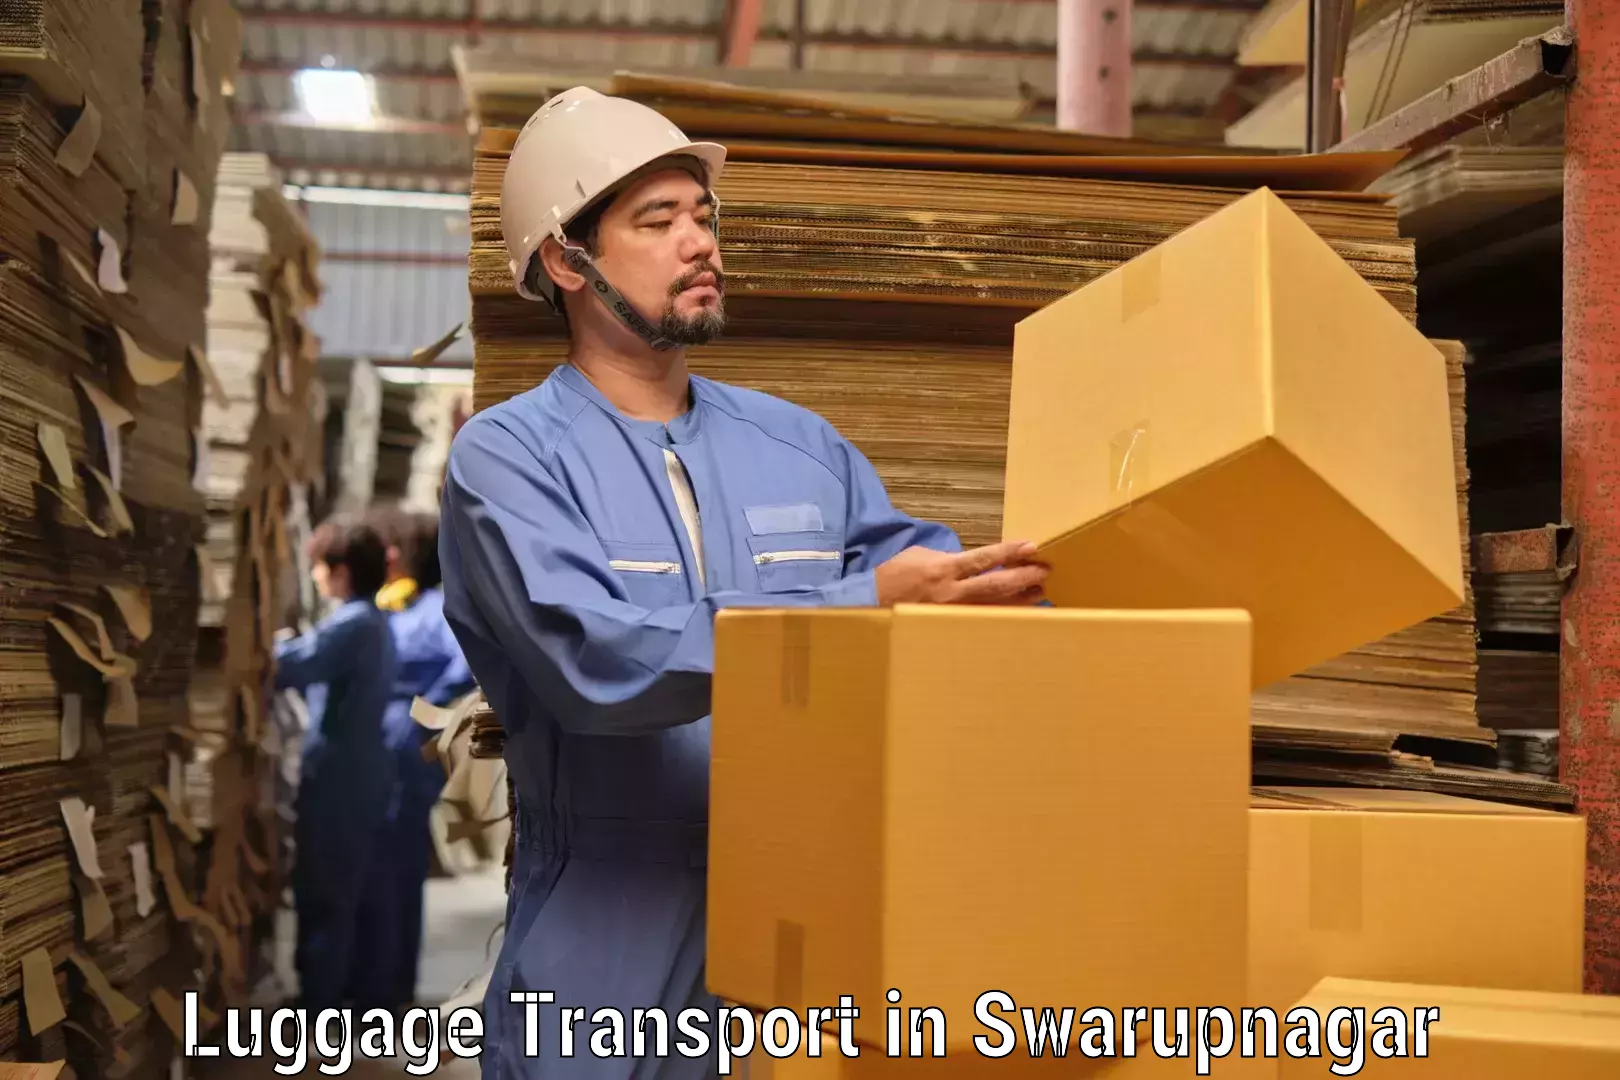 Discounted baggage transport in Swarupnagar